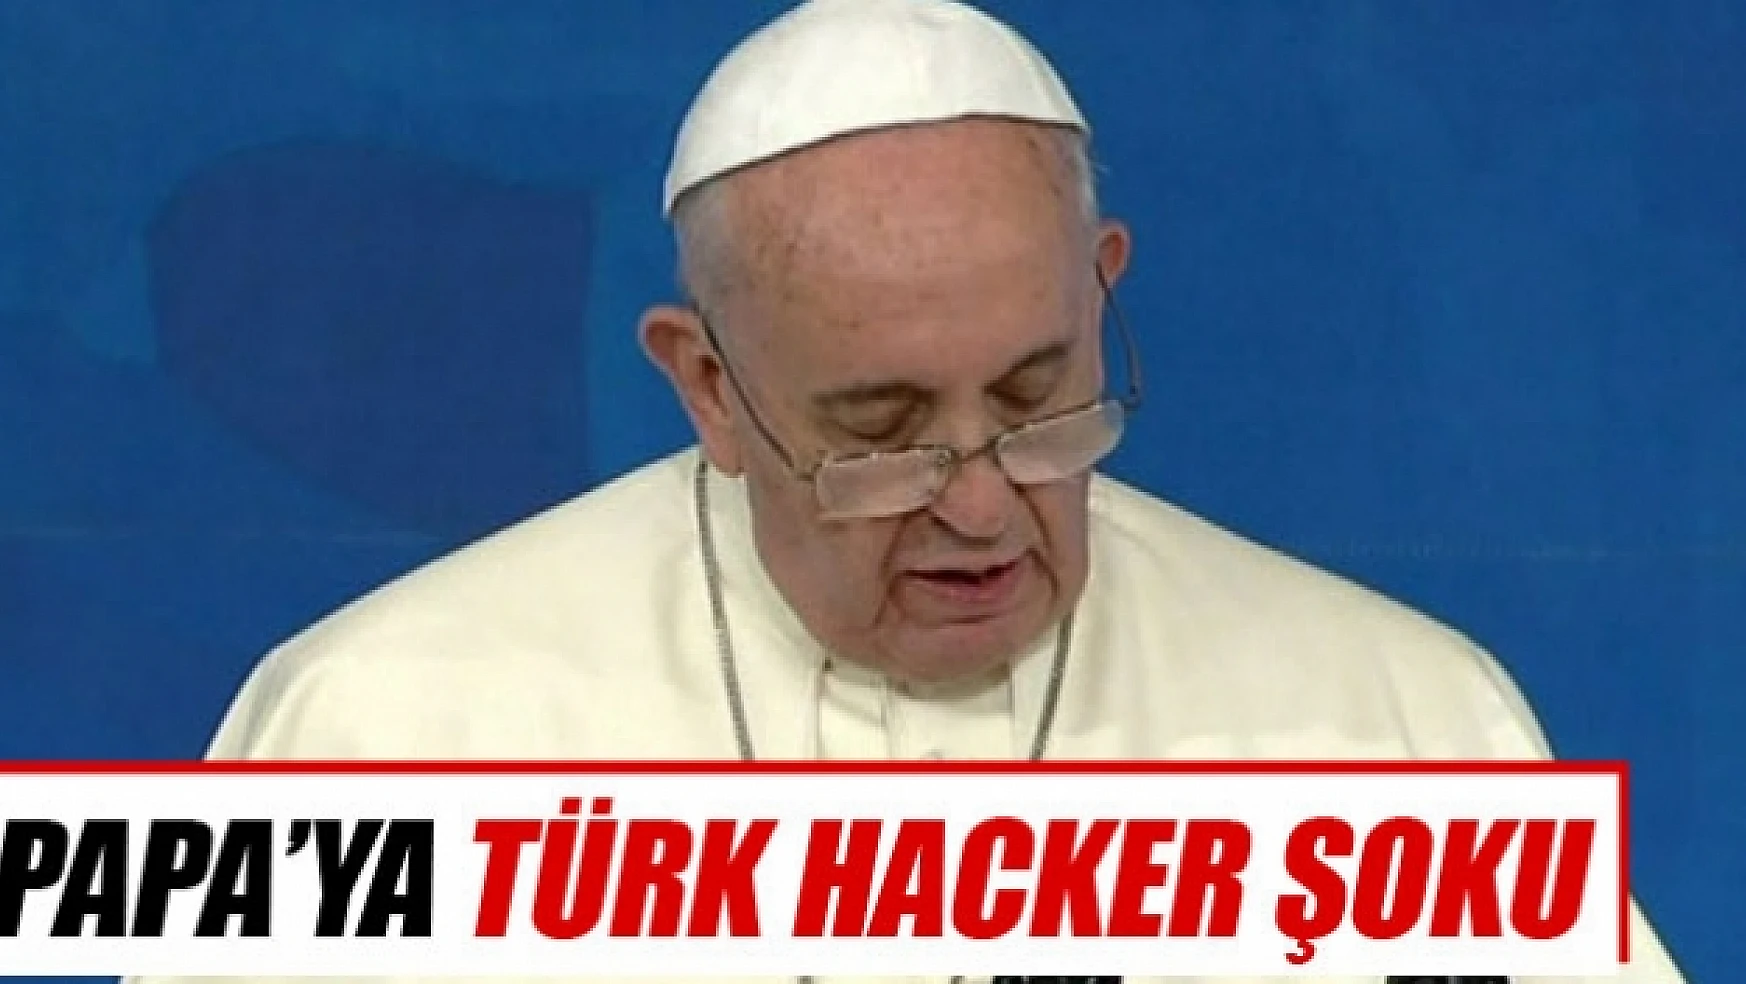 Türk hacker soykırım diyen Papa'ya cezayı verdi